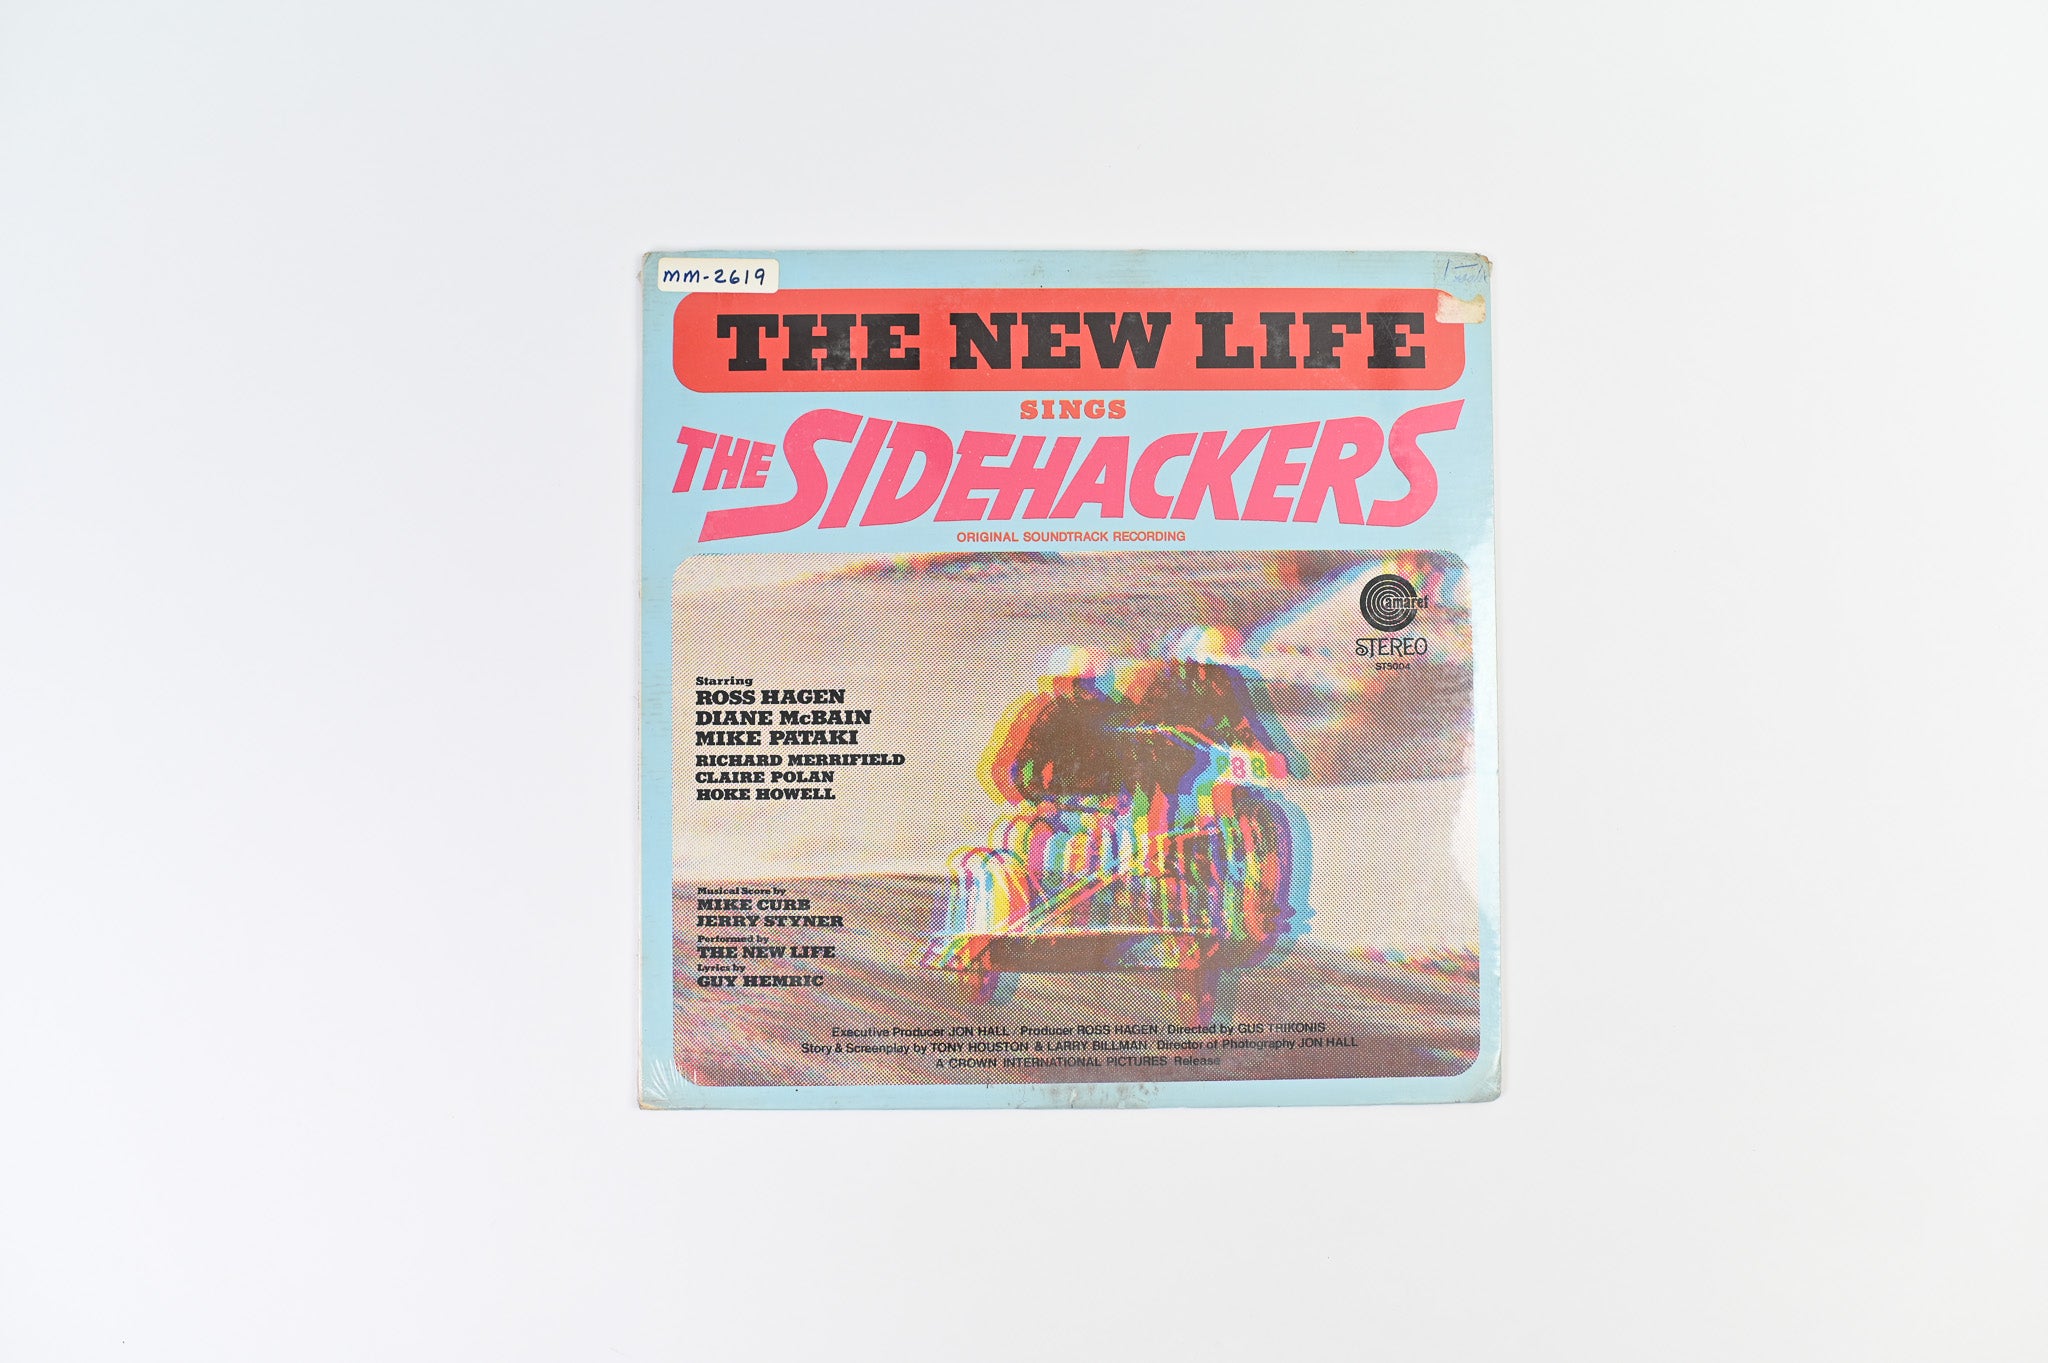 The New Life - The Sidehackers on Camaret Sealed